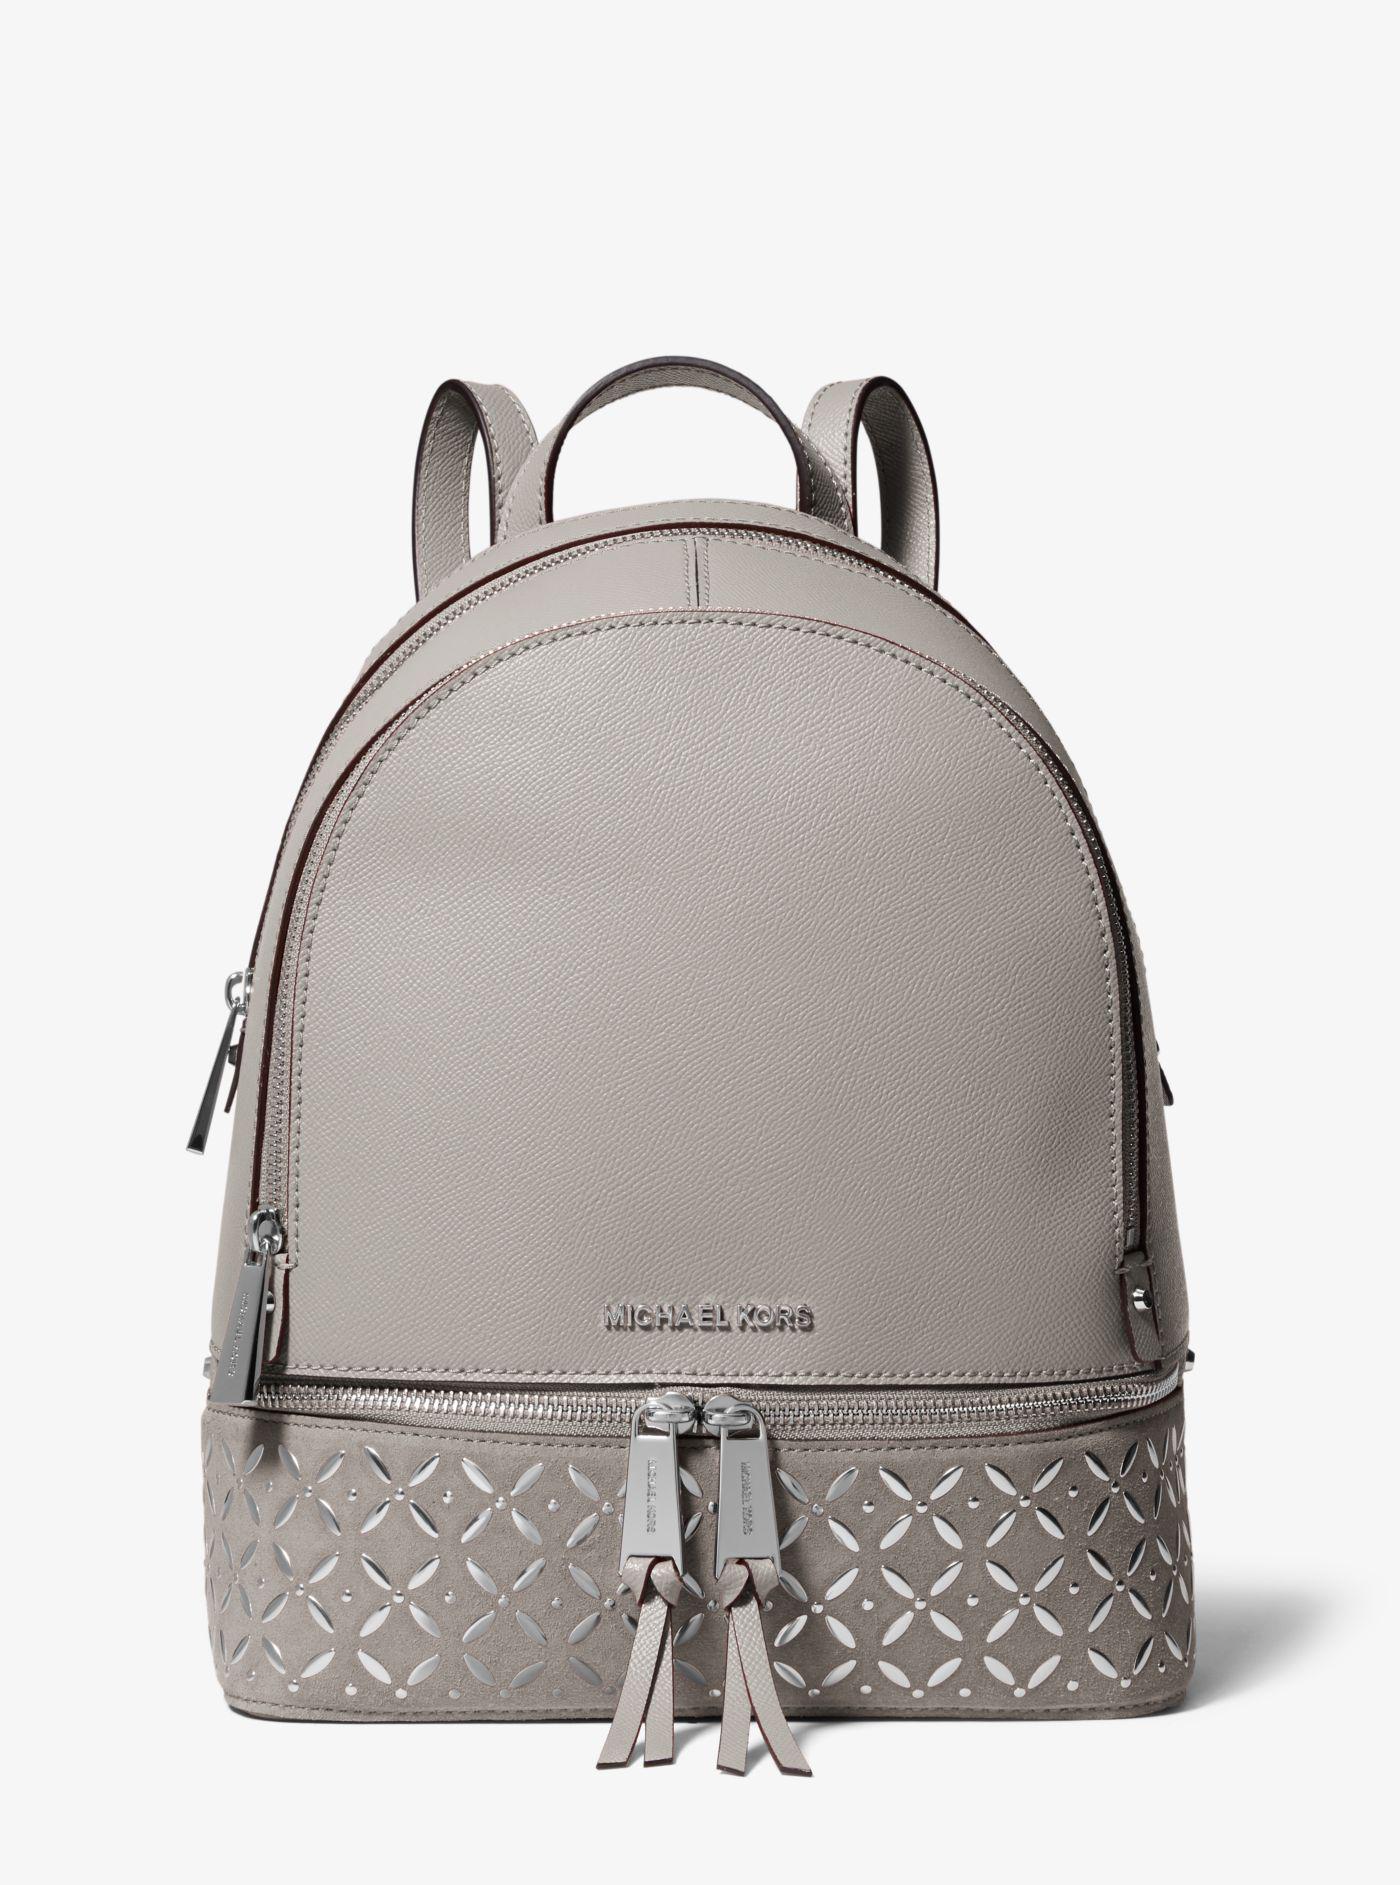 Michael Kors Rhea Medium Embellished Leather Backpack in Pearl Grey (Gray)  | Lyst